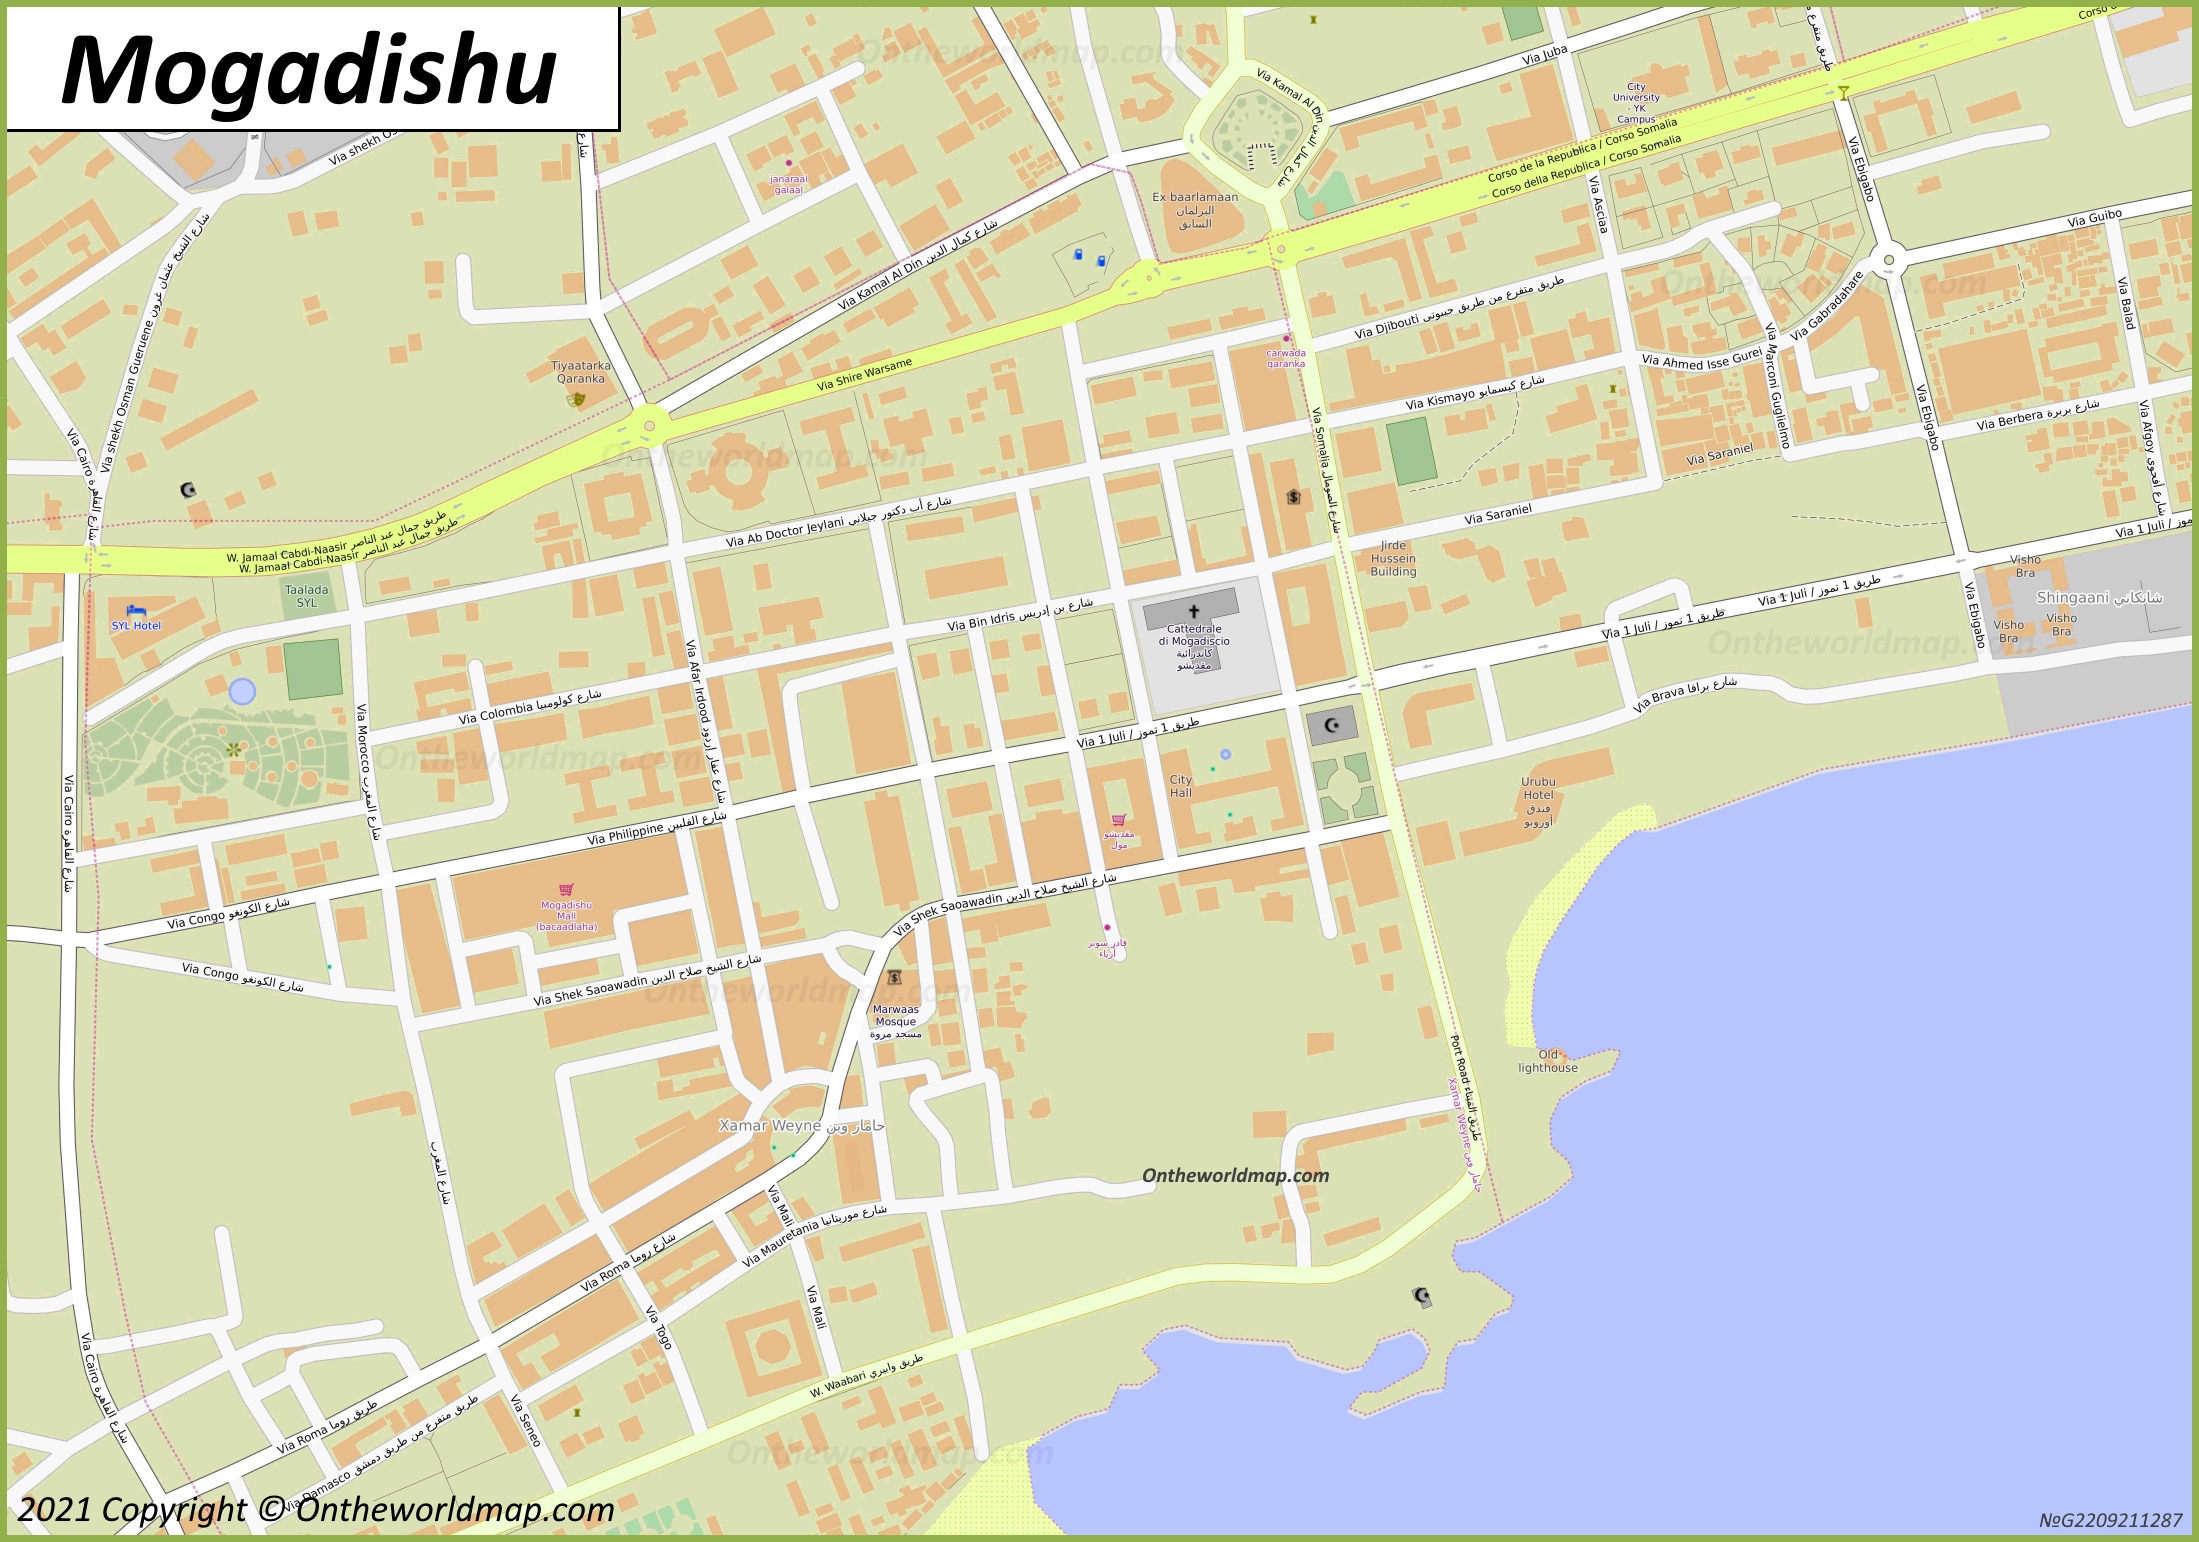 Mogadishu Old Town Map